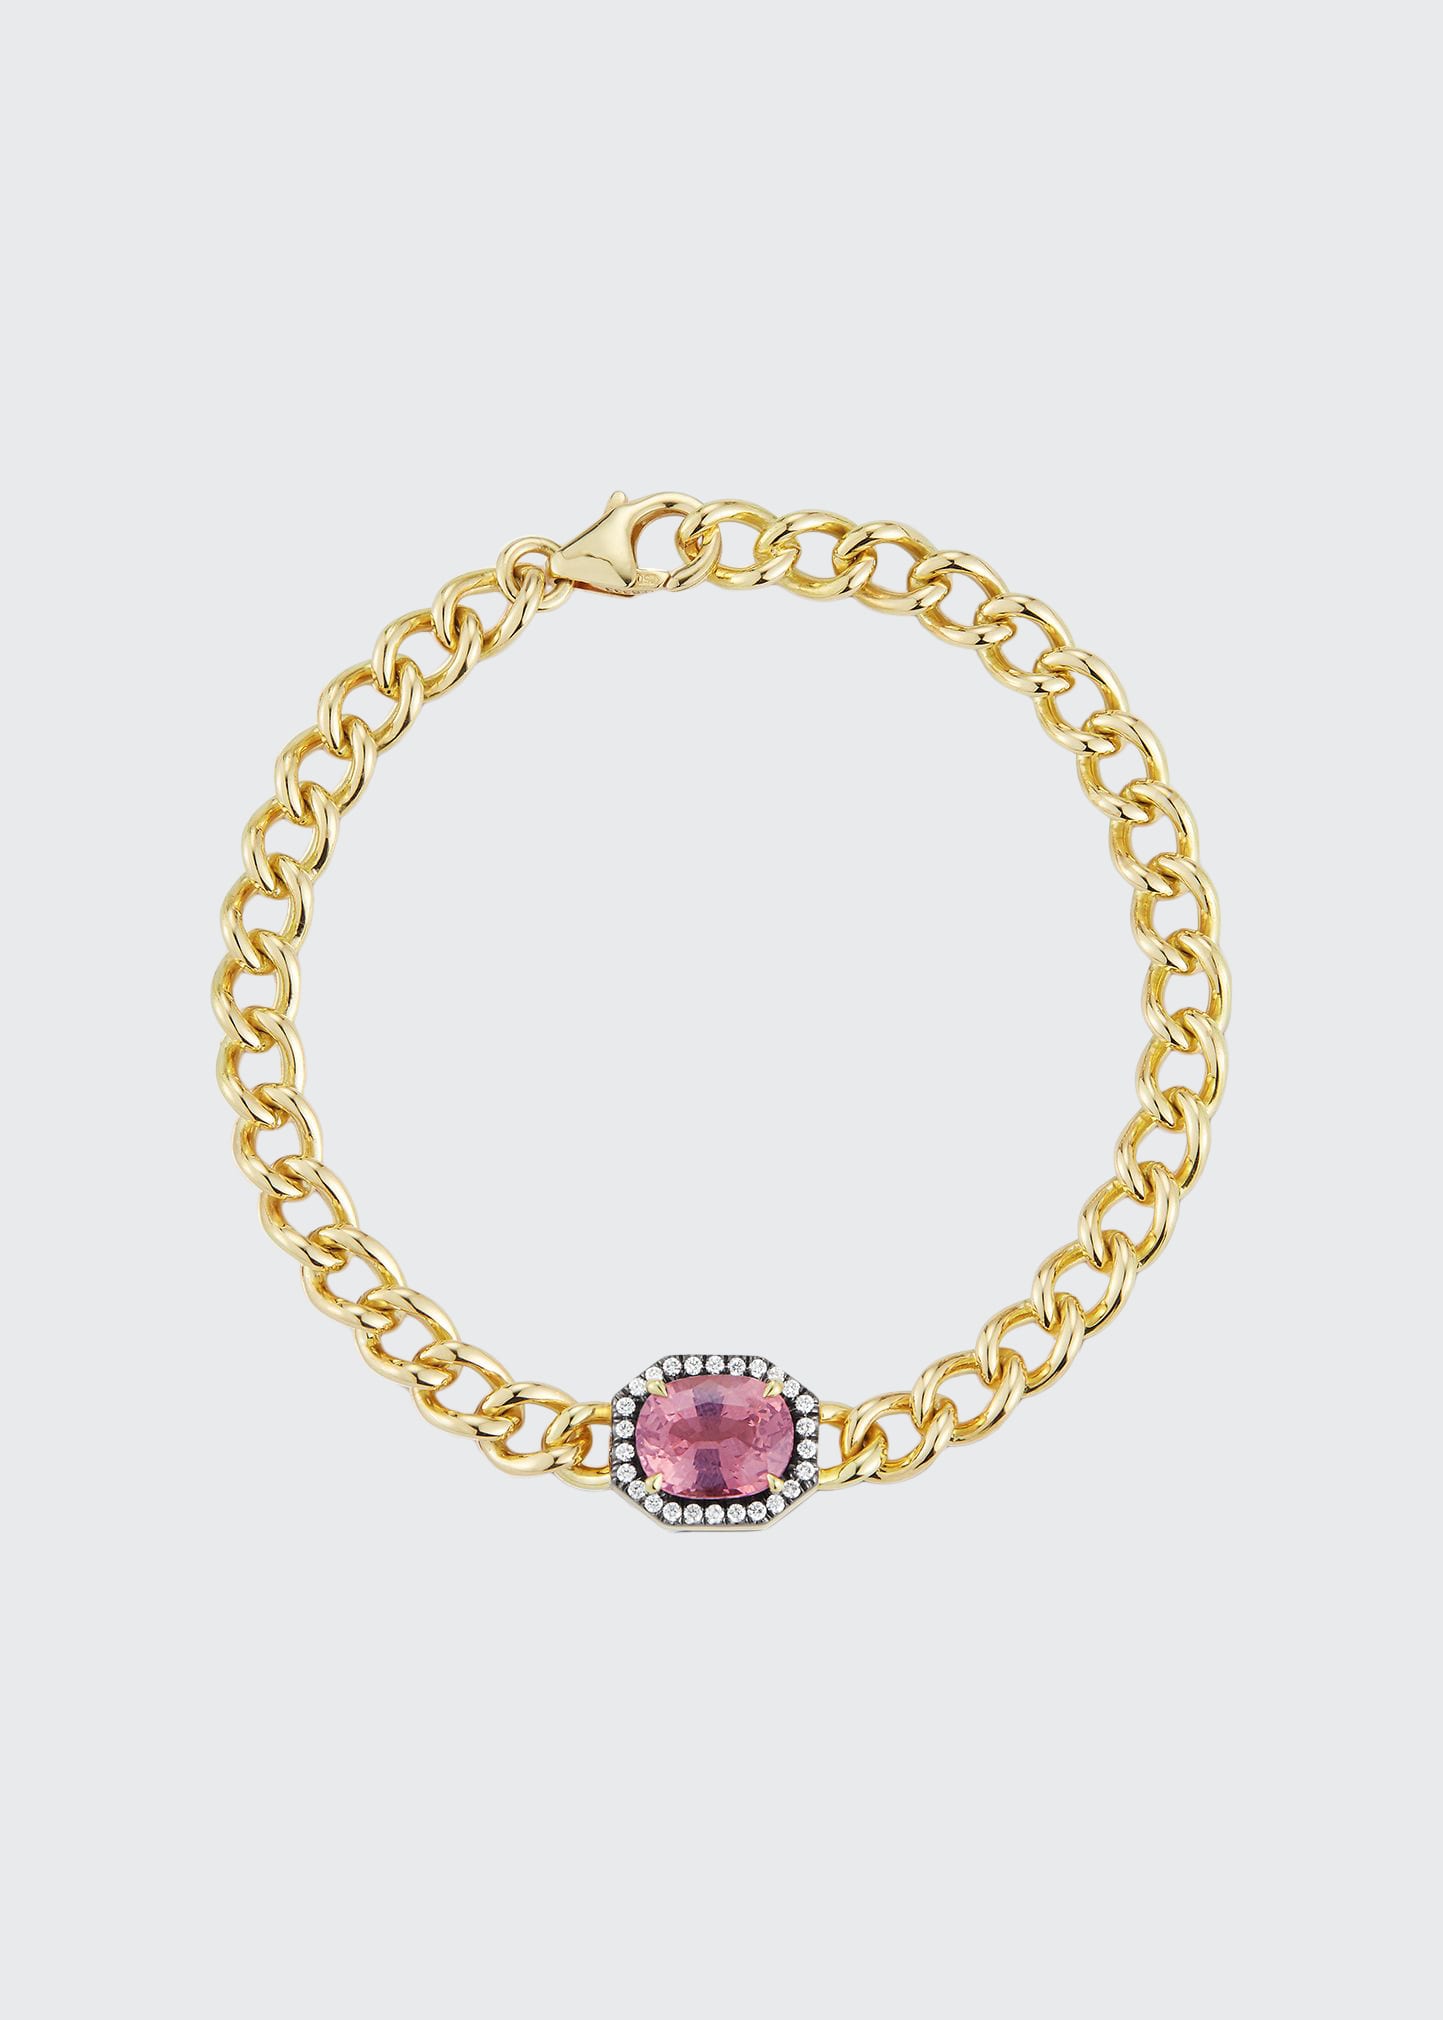 Jemma Wynne One-of-a-Kind Pink SpinelToujours Bracelet